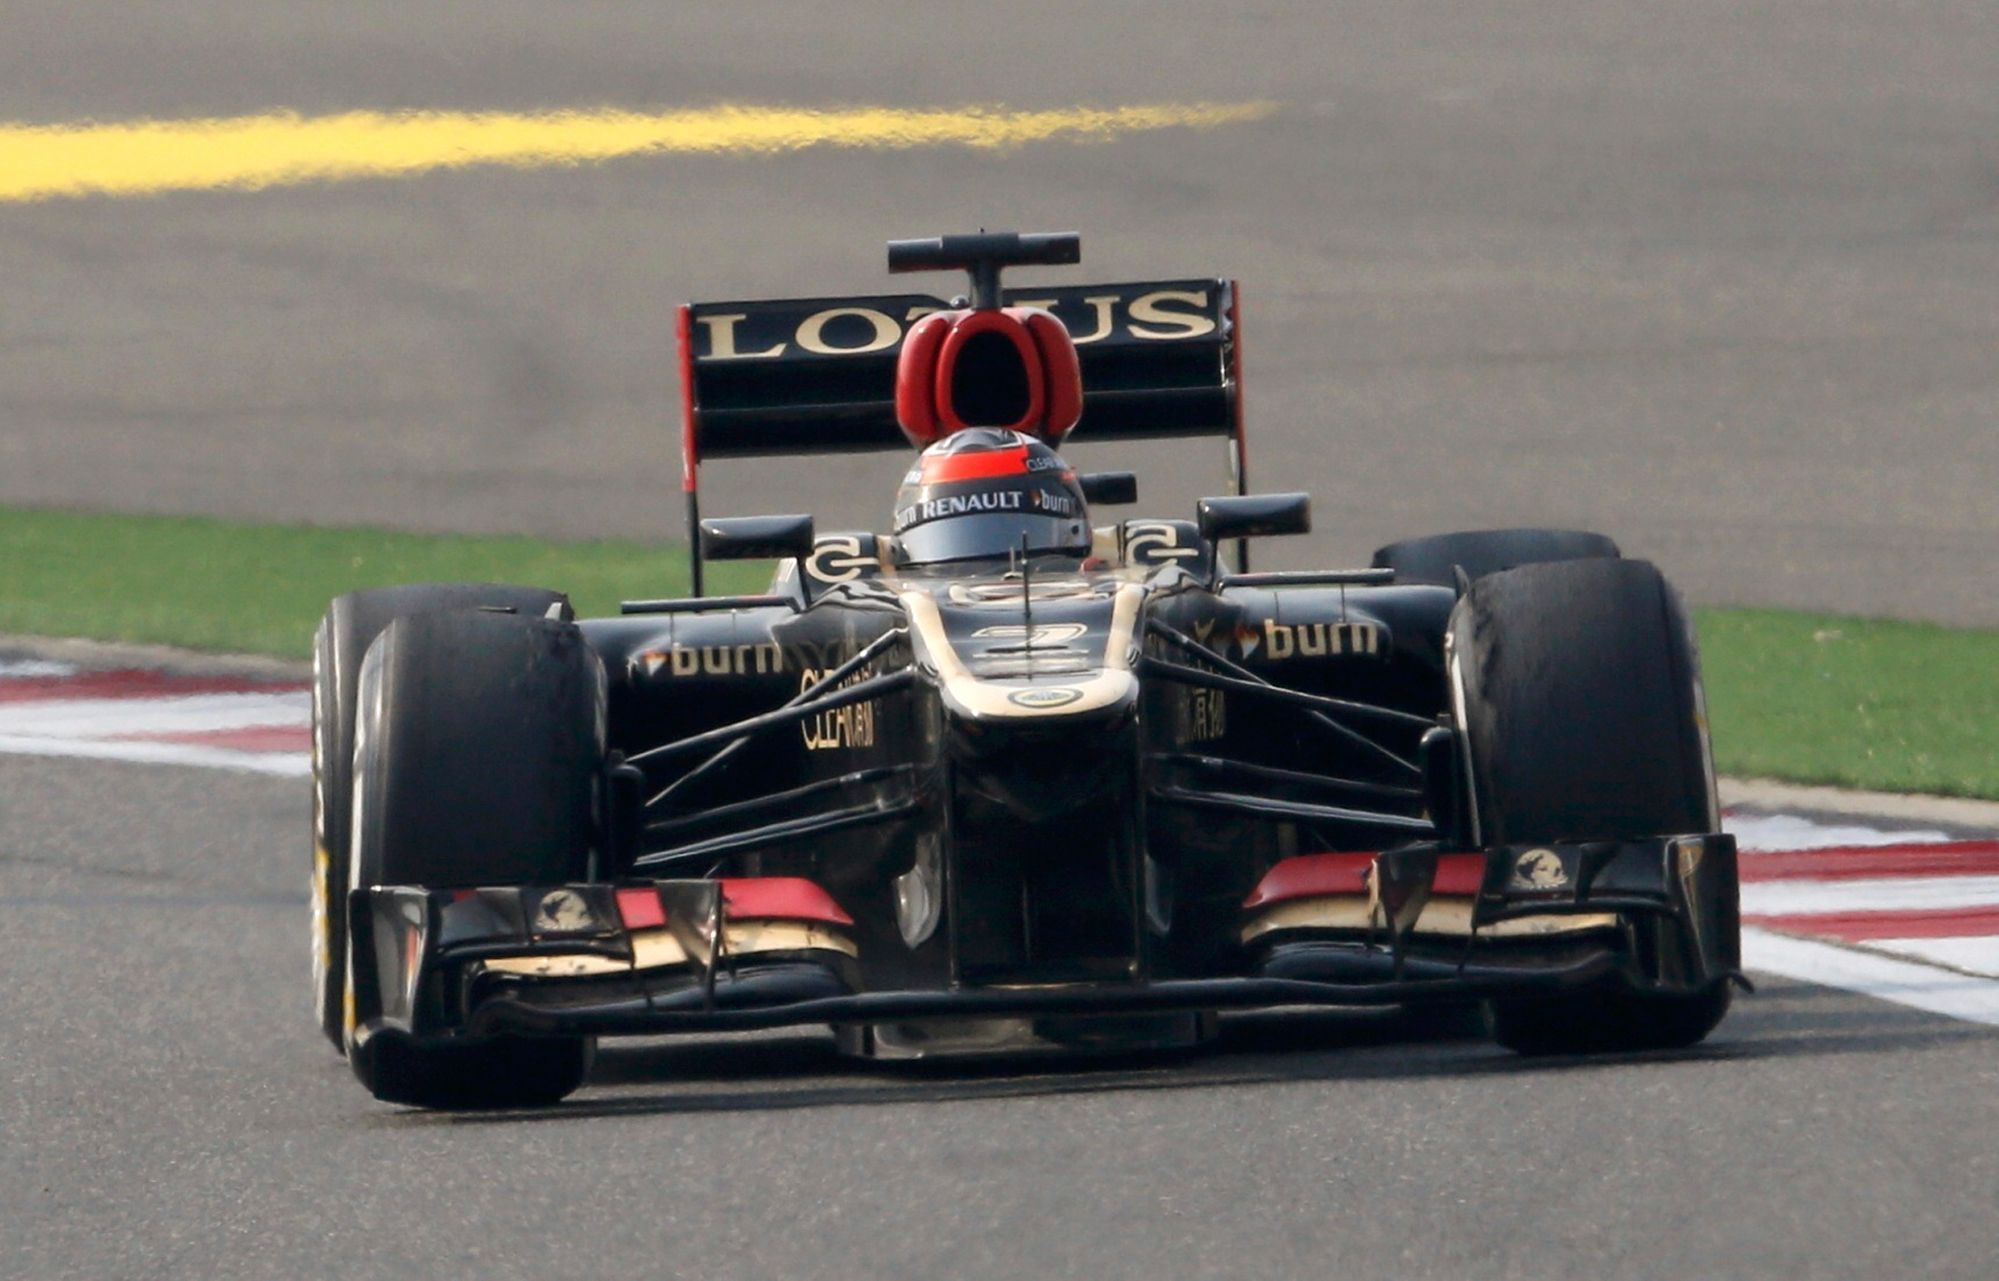 Formule 1, VC Číny: Kimi Räikkönen (Lotus)